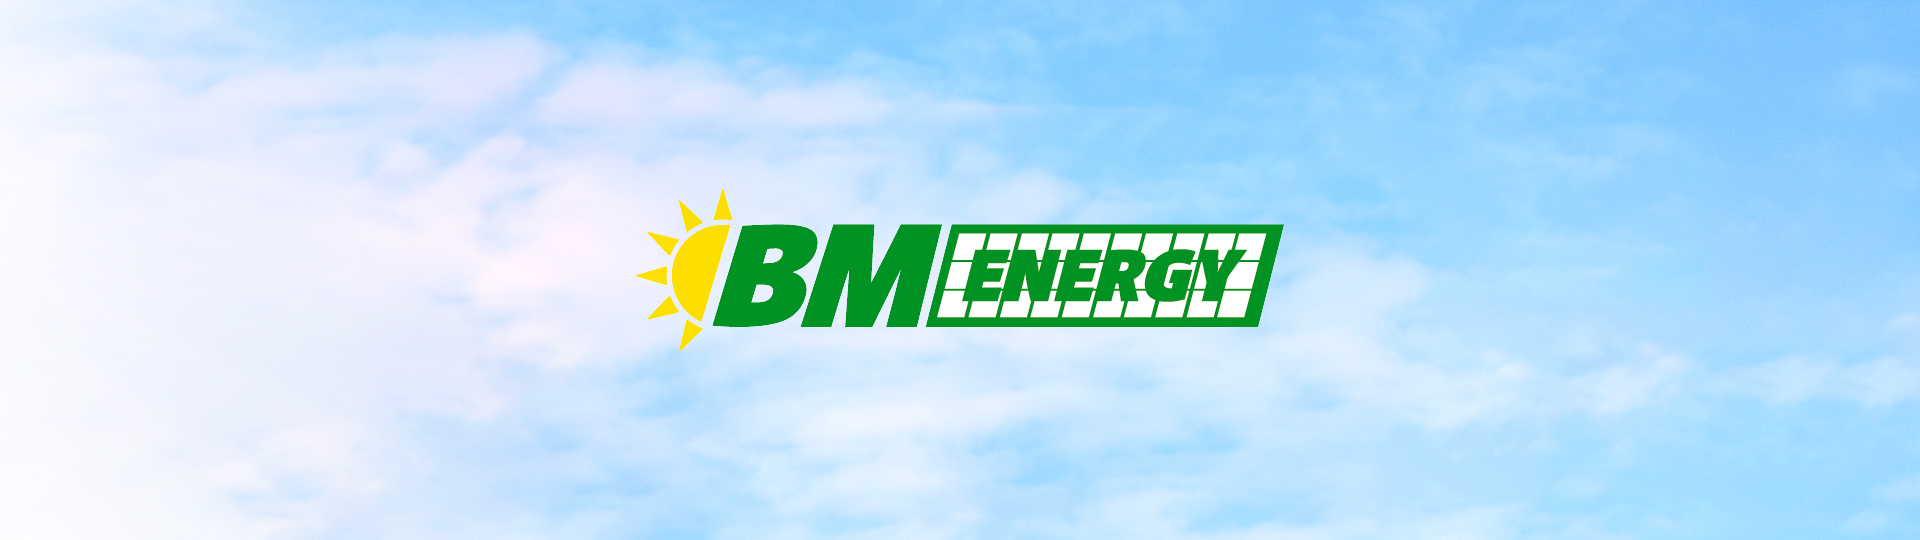 bm-energy fond